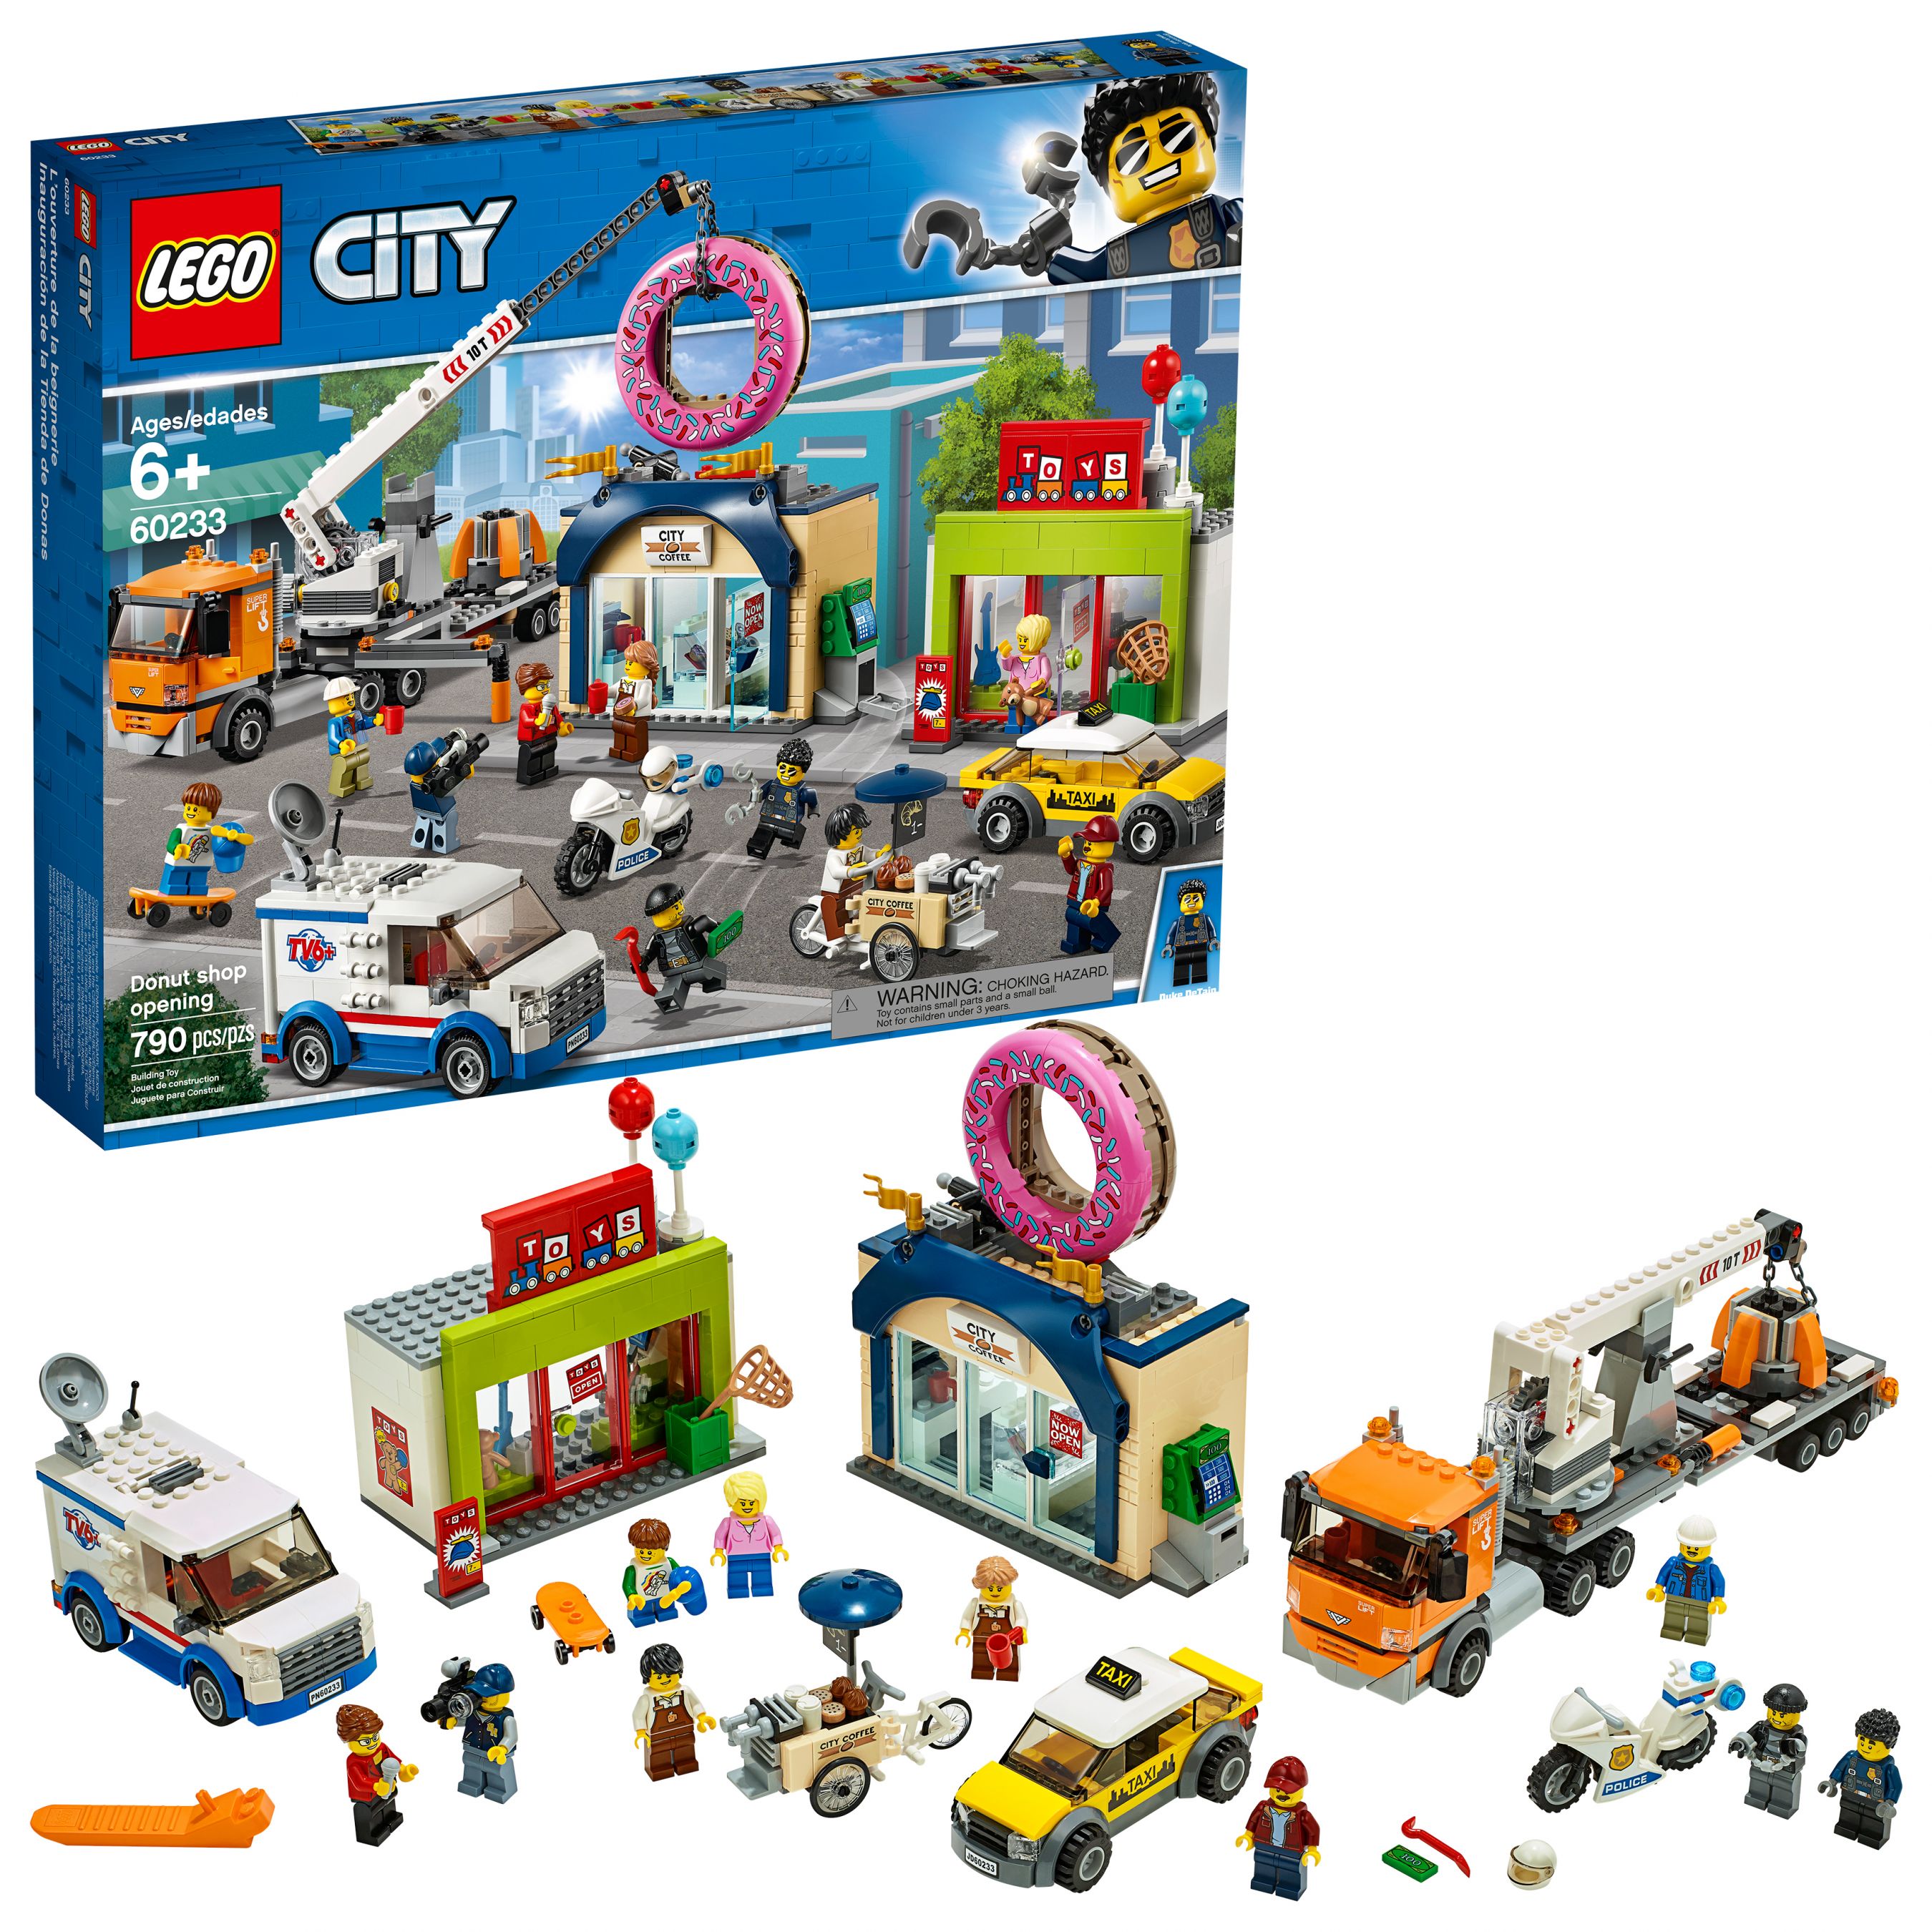 LEGO City 60233 Große Donut-Shop-Eröffnung LEGO_60233_alt2.jpg